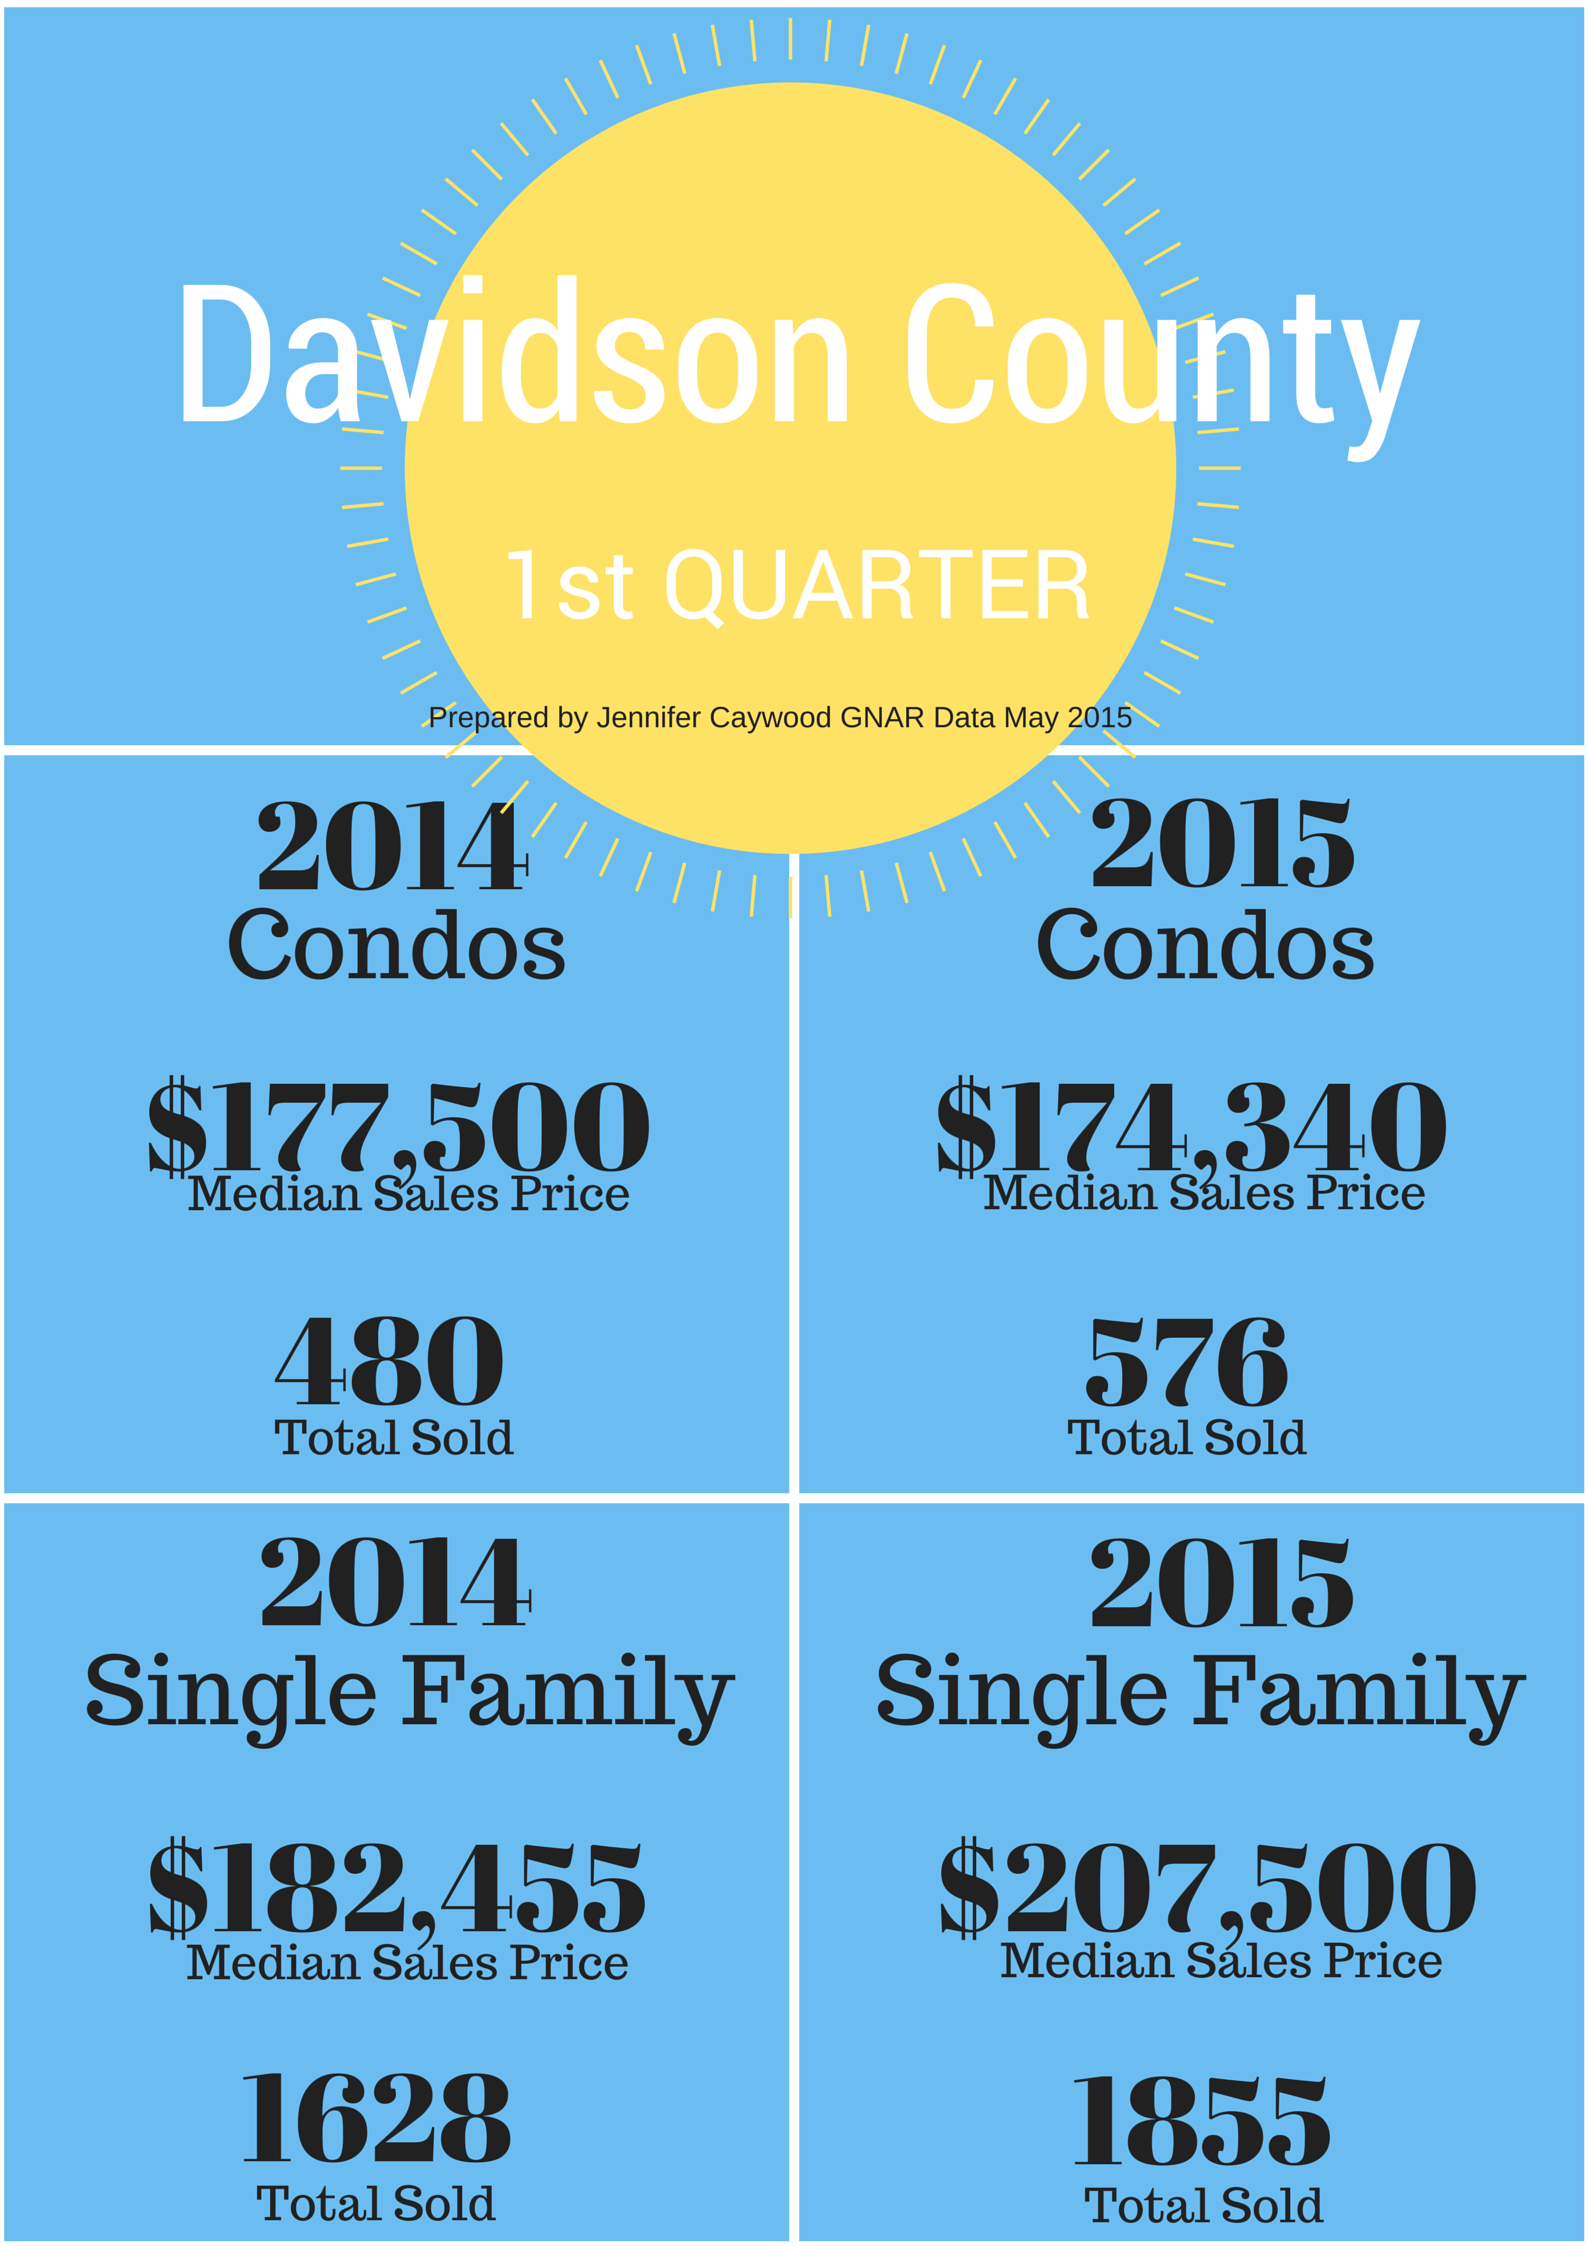 Davidson County 1st Quarter 2015 Home Sales